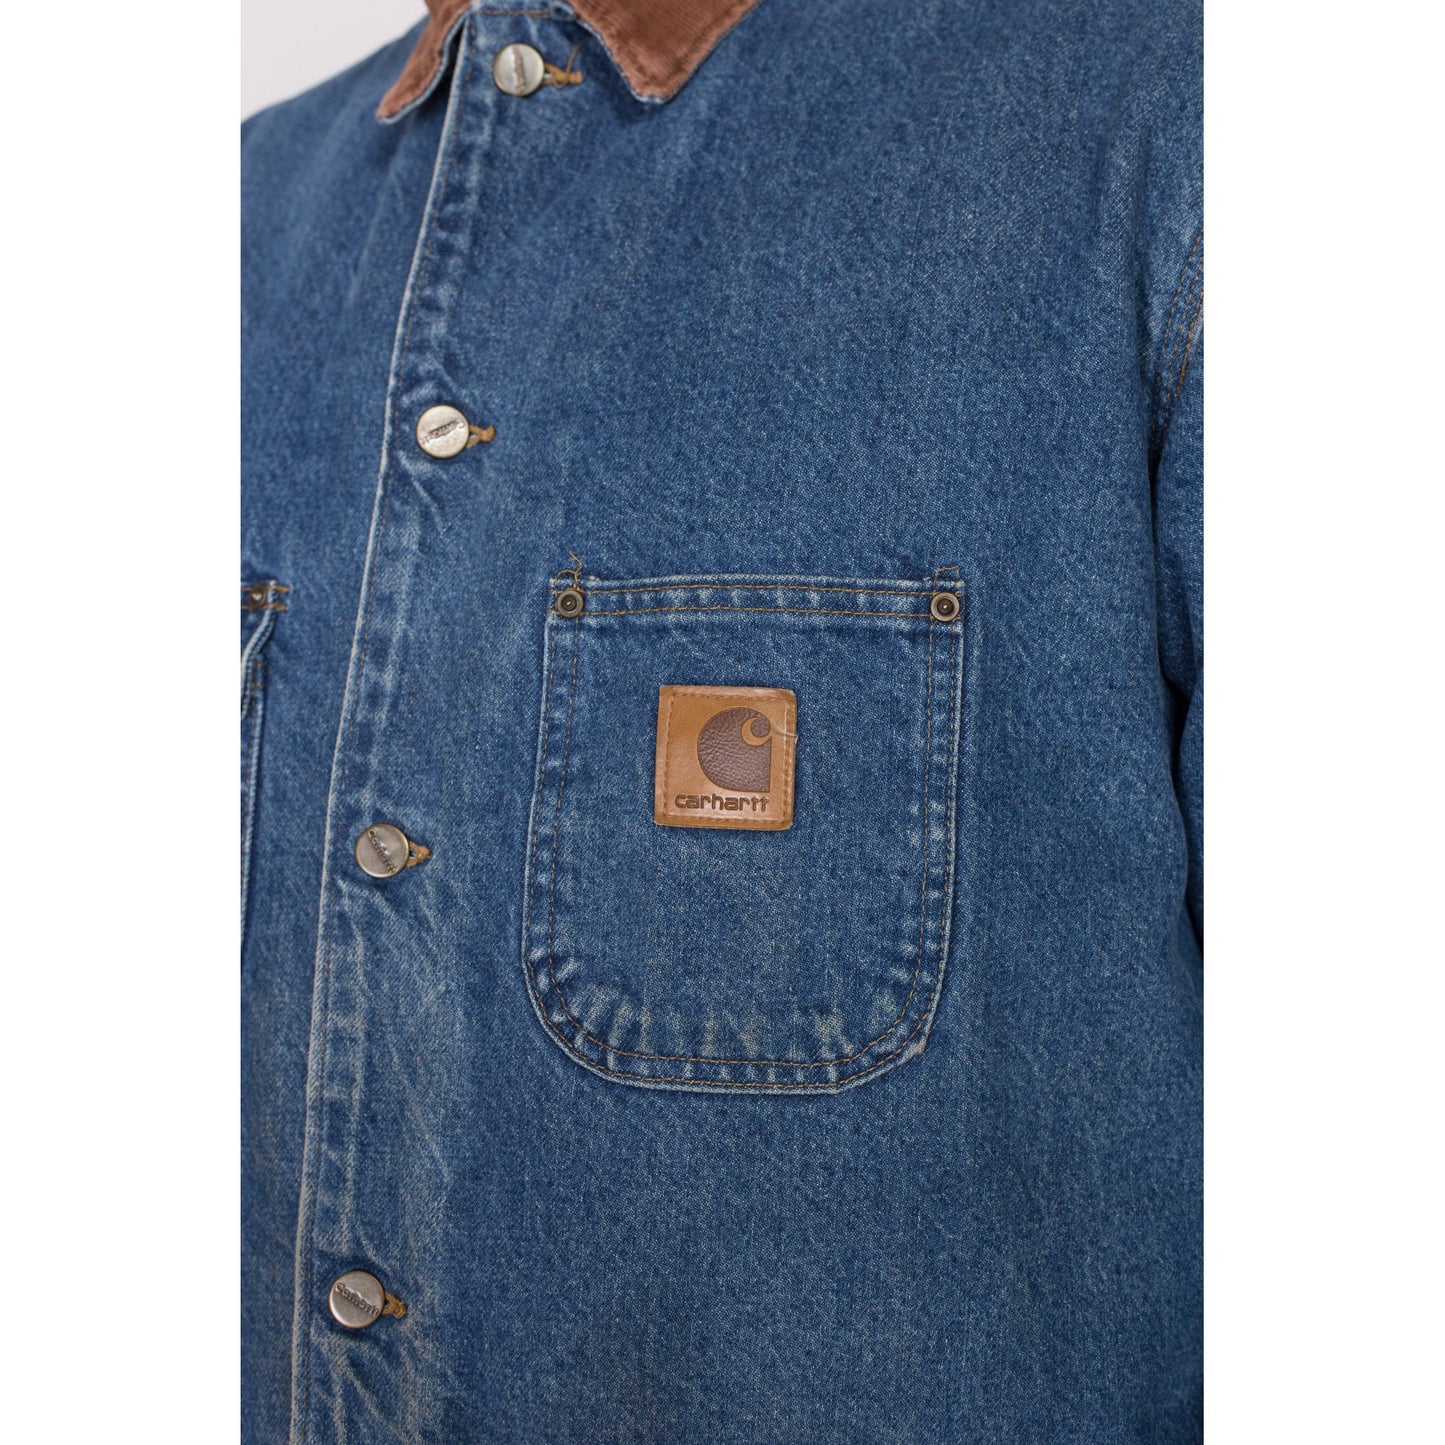 XL 90s Carhartt Denim Blanket Lined Chore Coat | Vintage Union Made In USA Corduroy Collar Workwear Jean Jacket